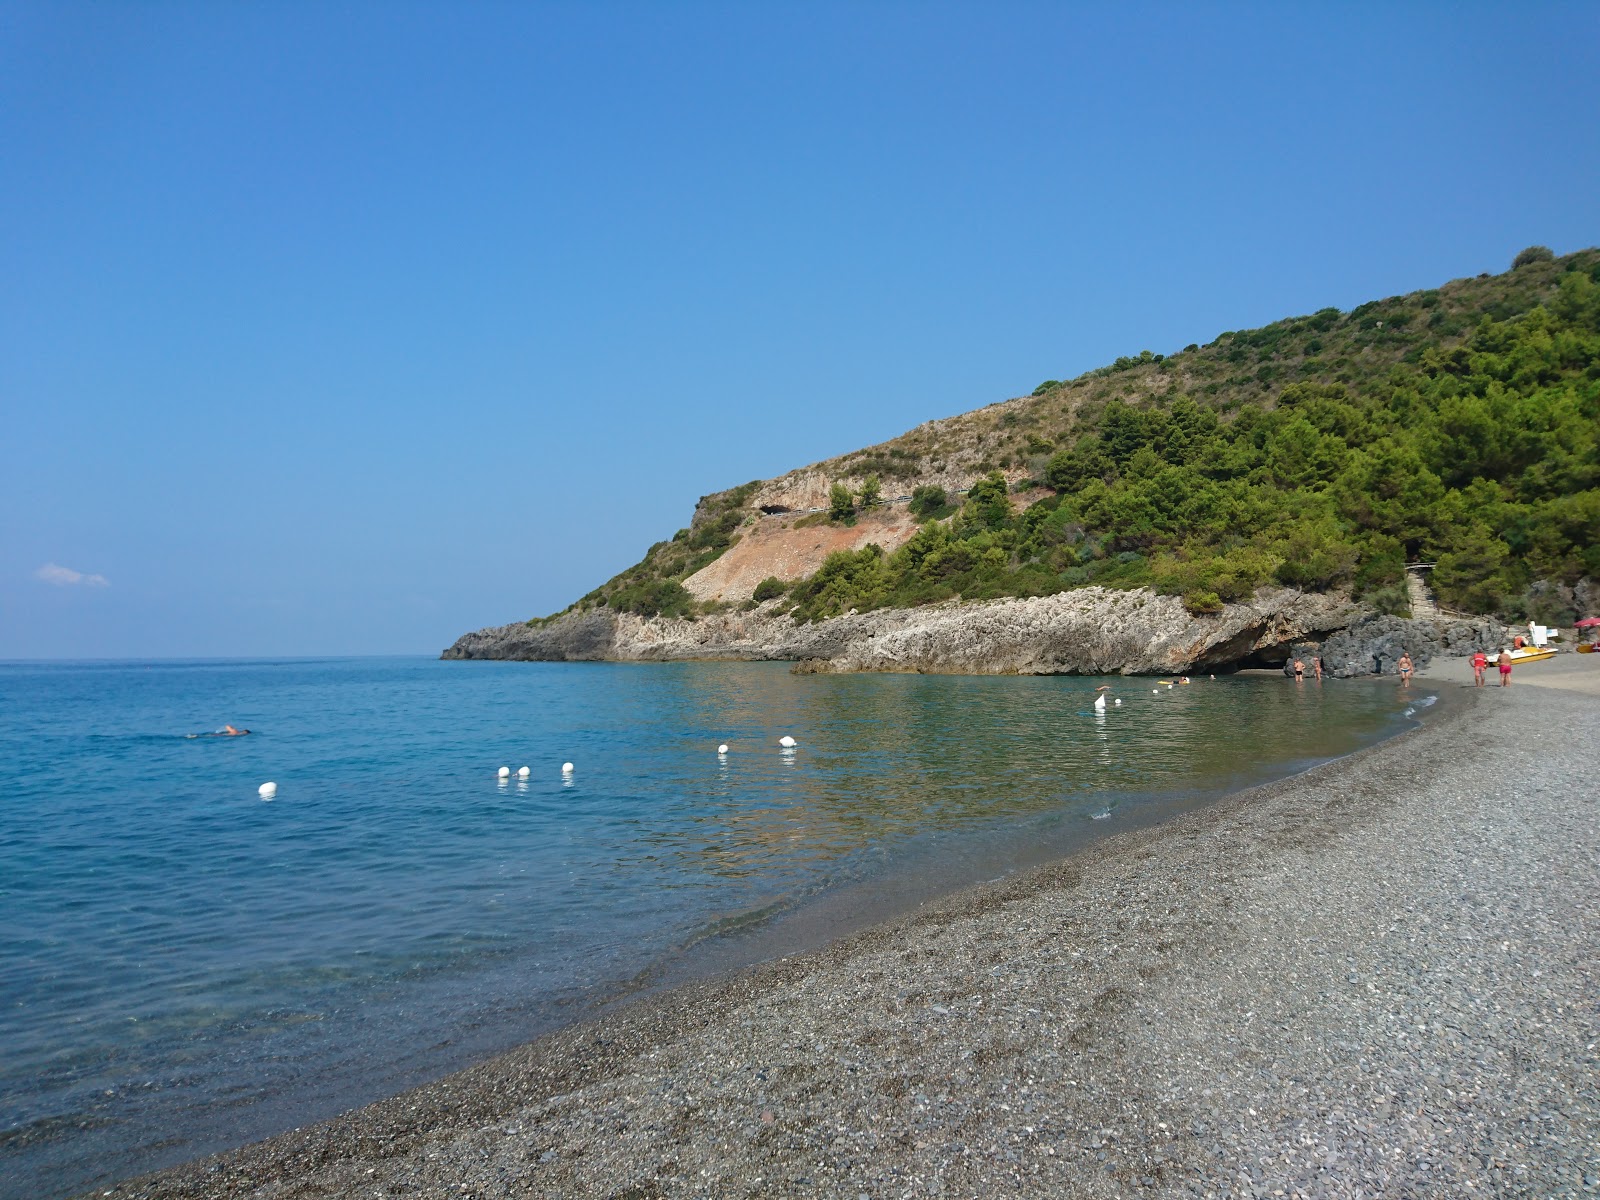 Foto av Spiaggia di Capogrosso II med medium nivå av renlighet